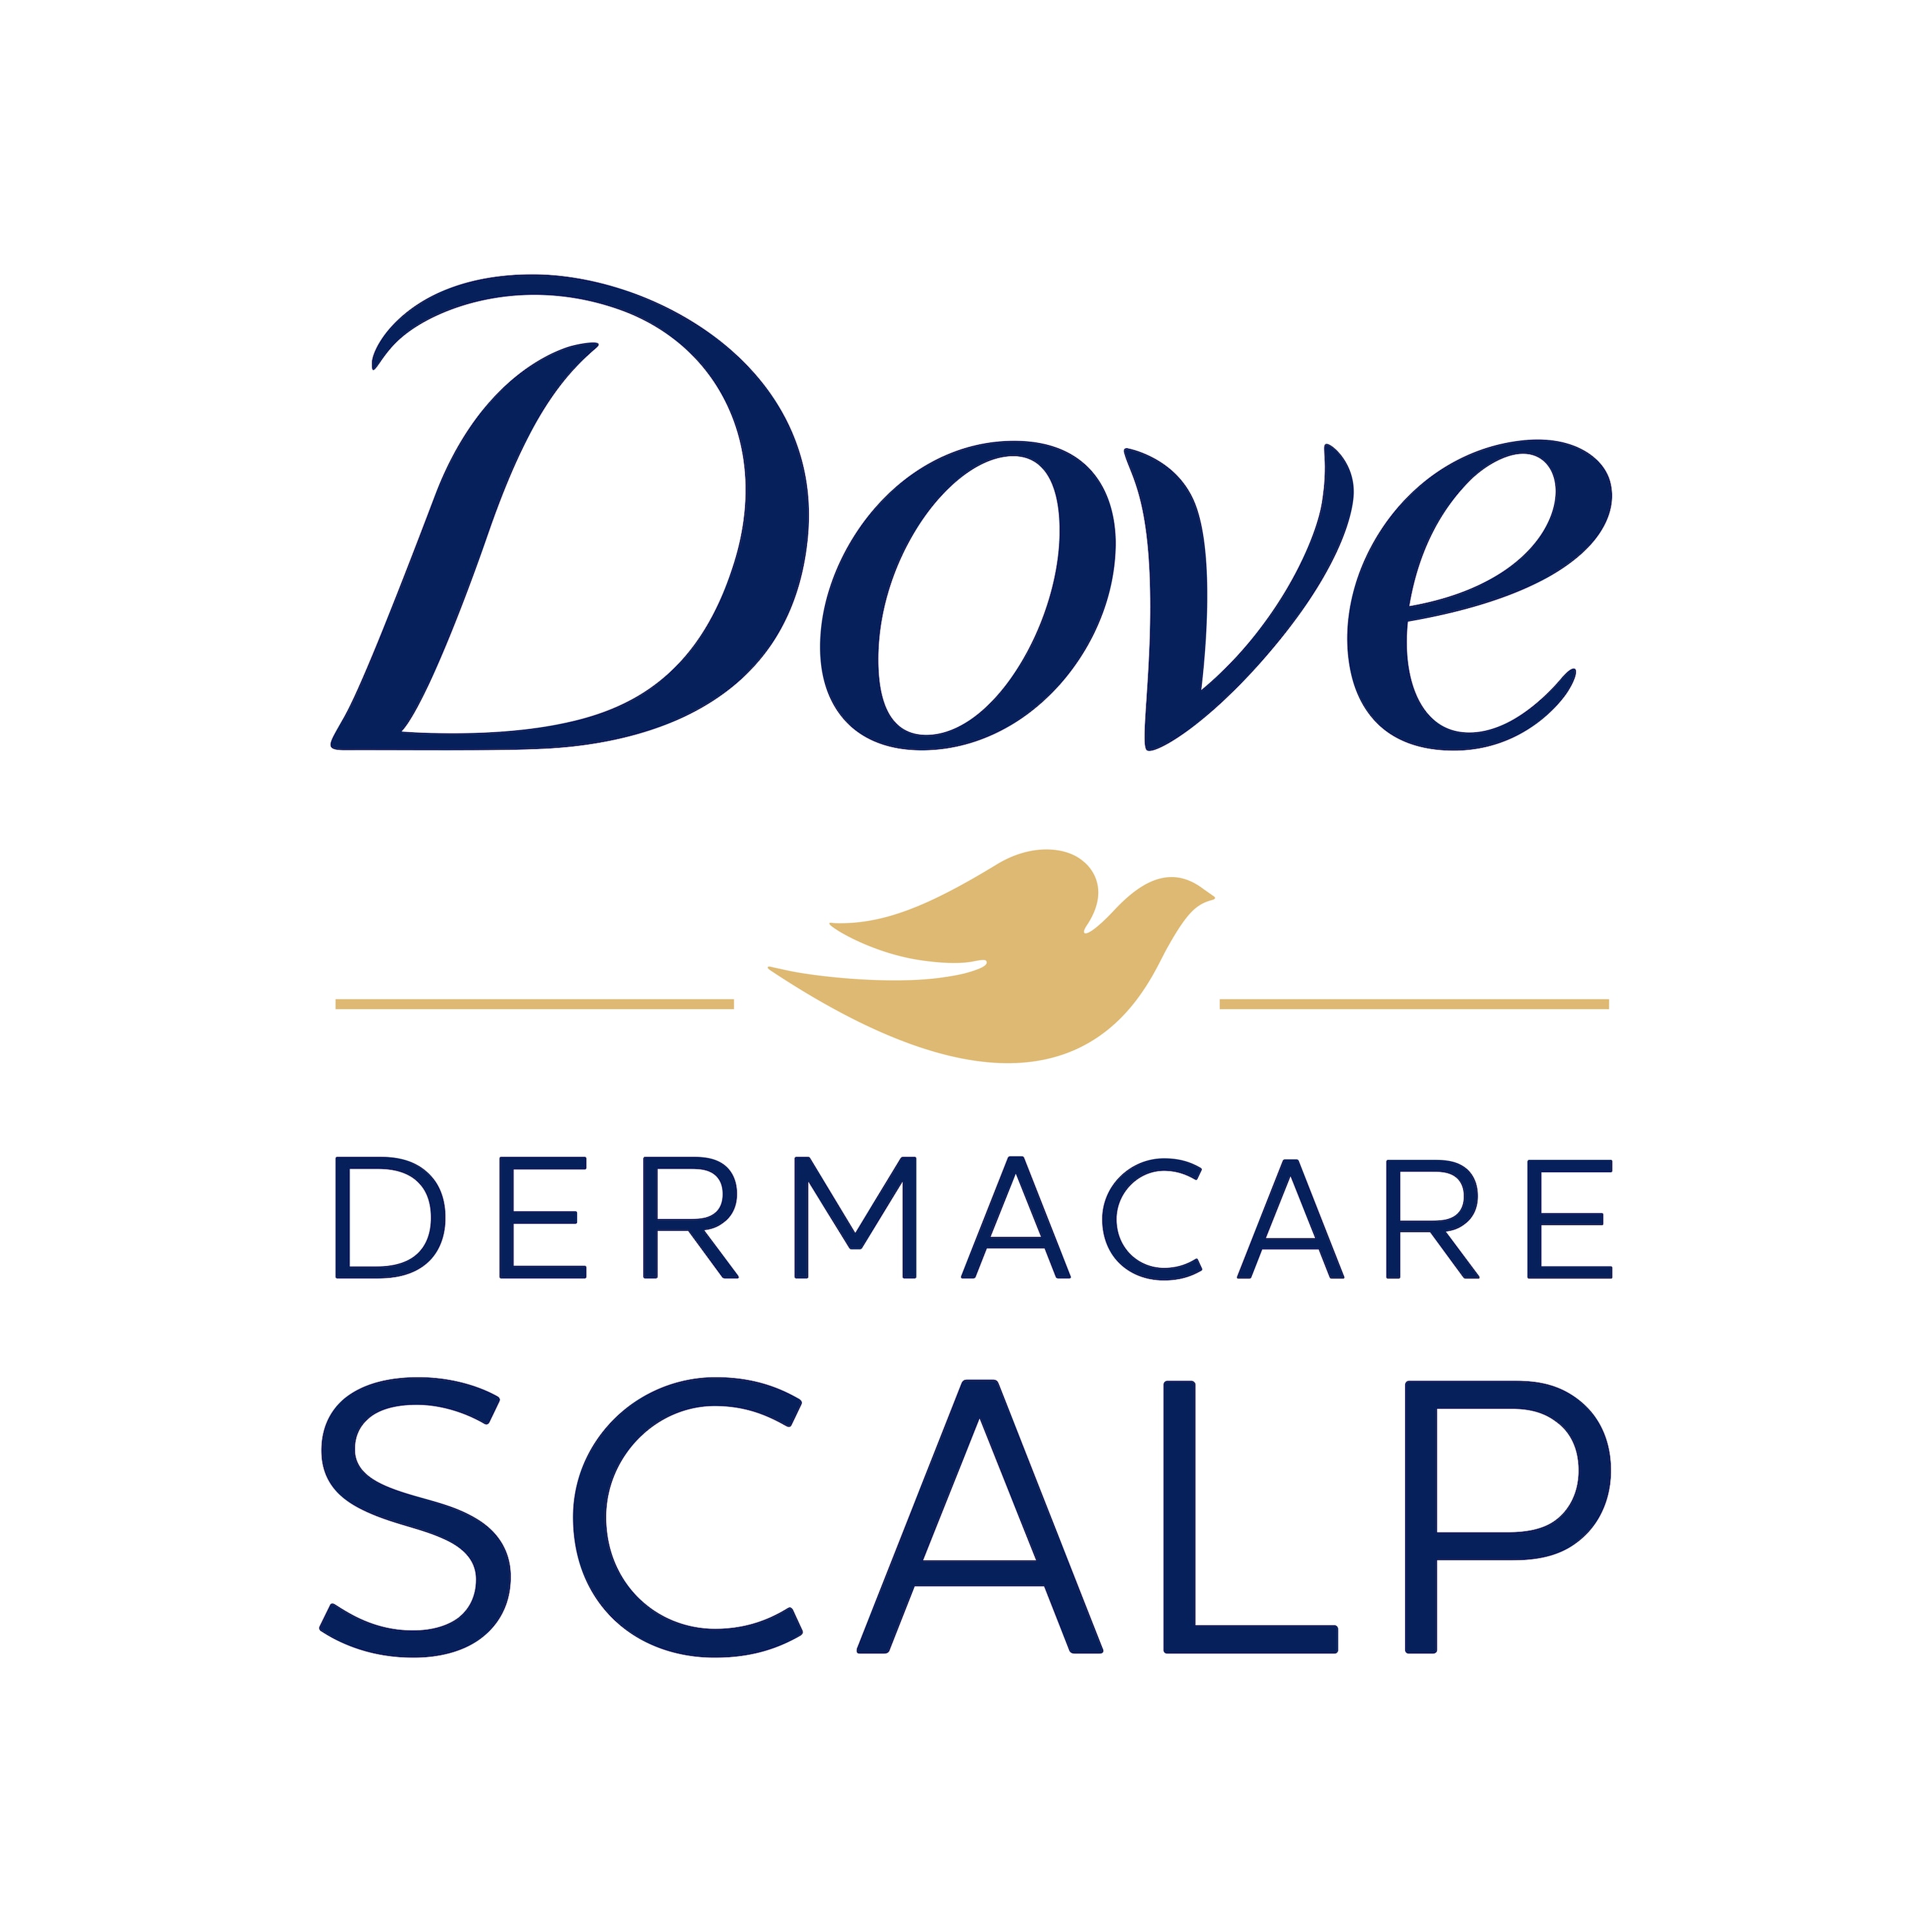 Dry Scalp Relief Anti Dandruff Shampoo